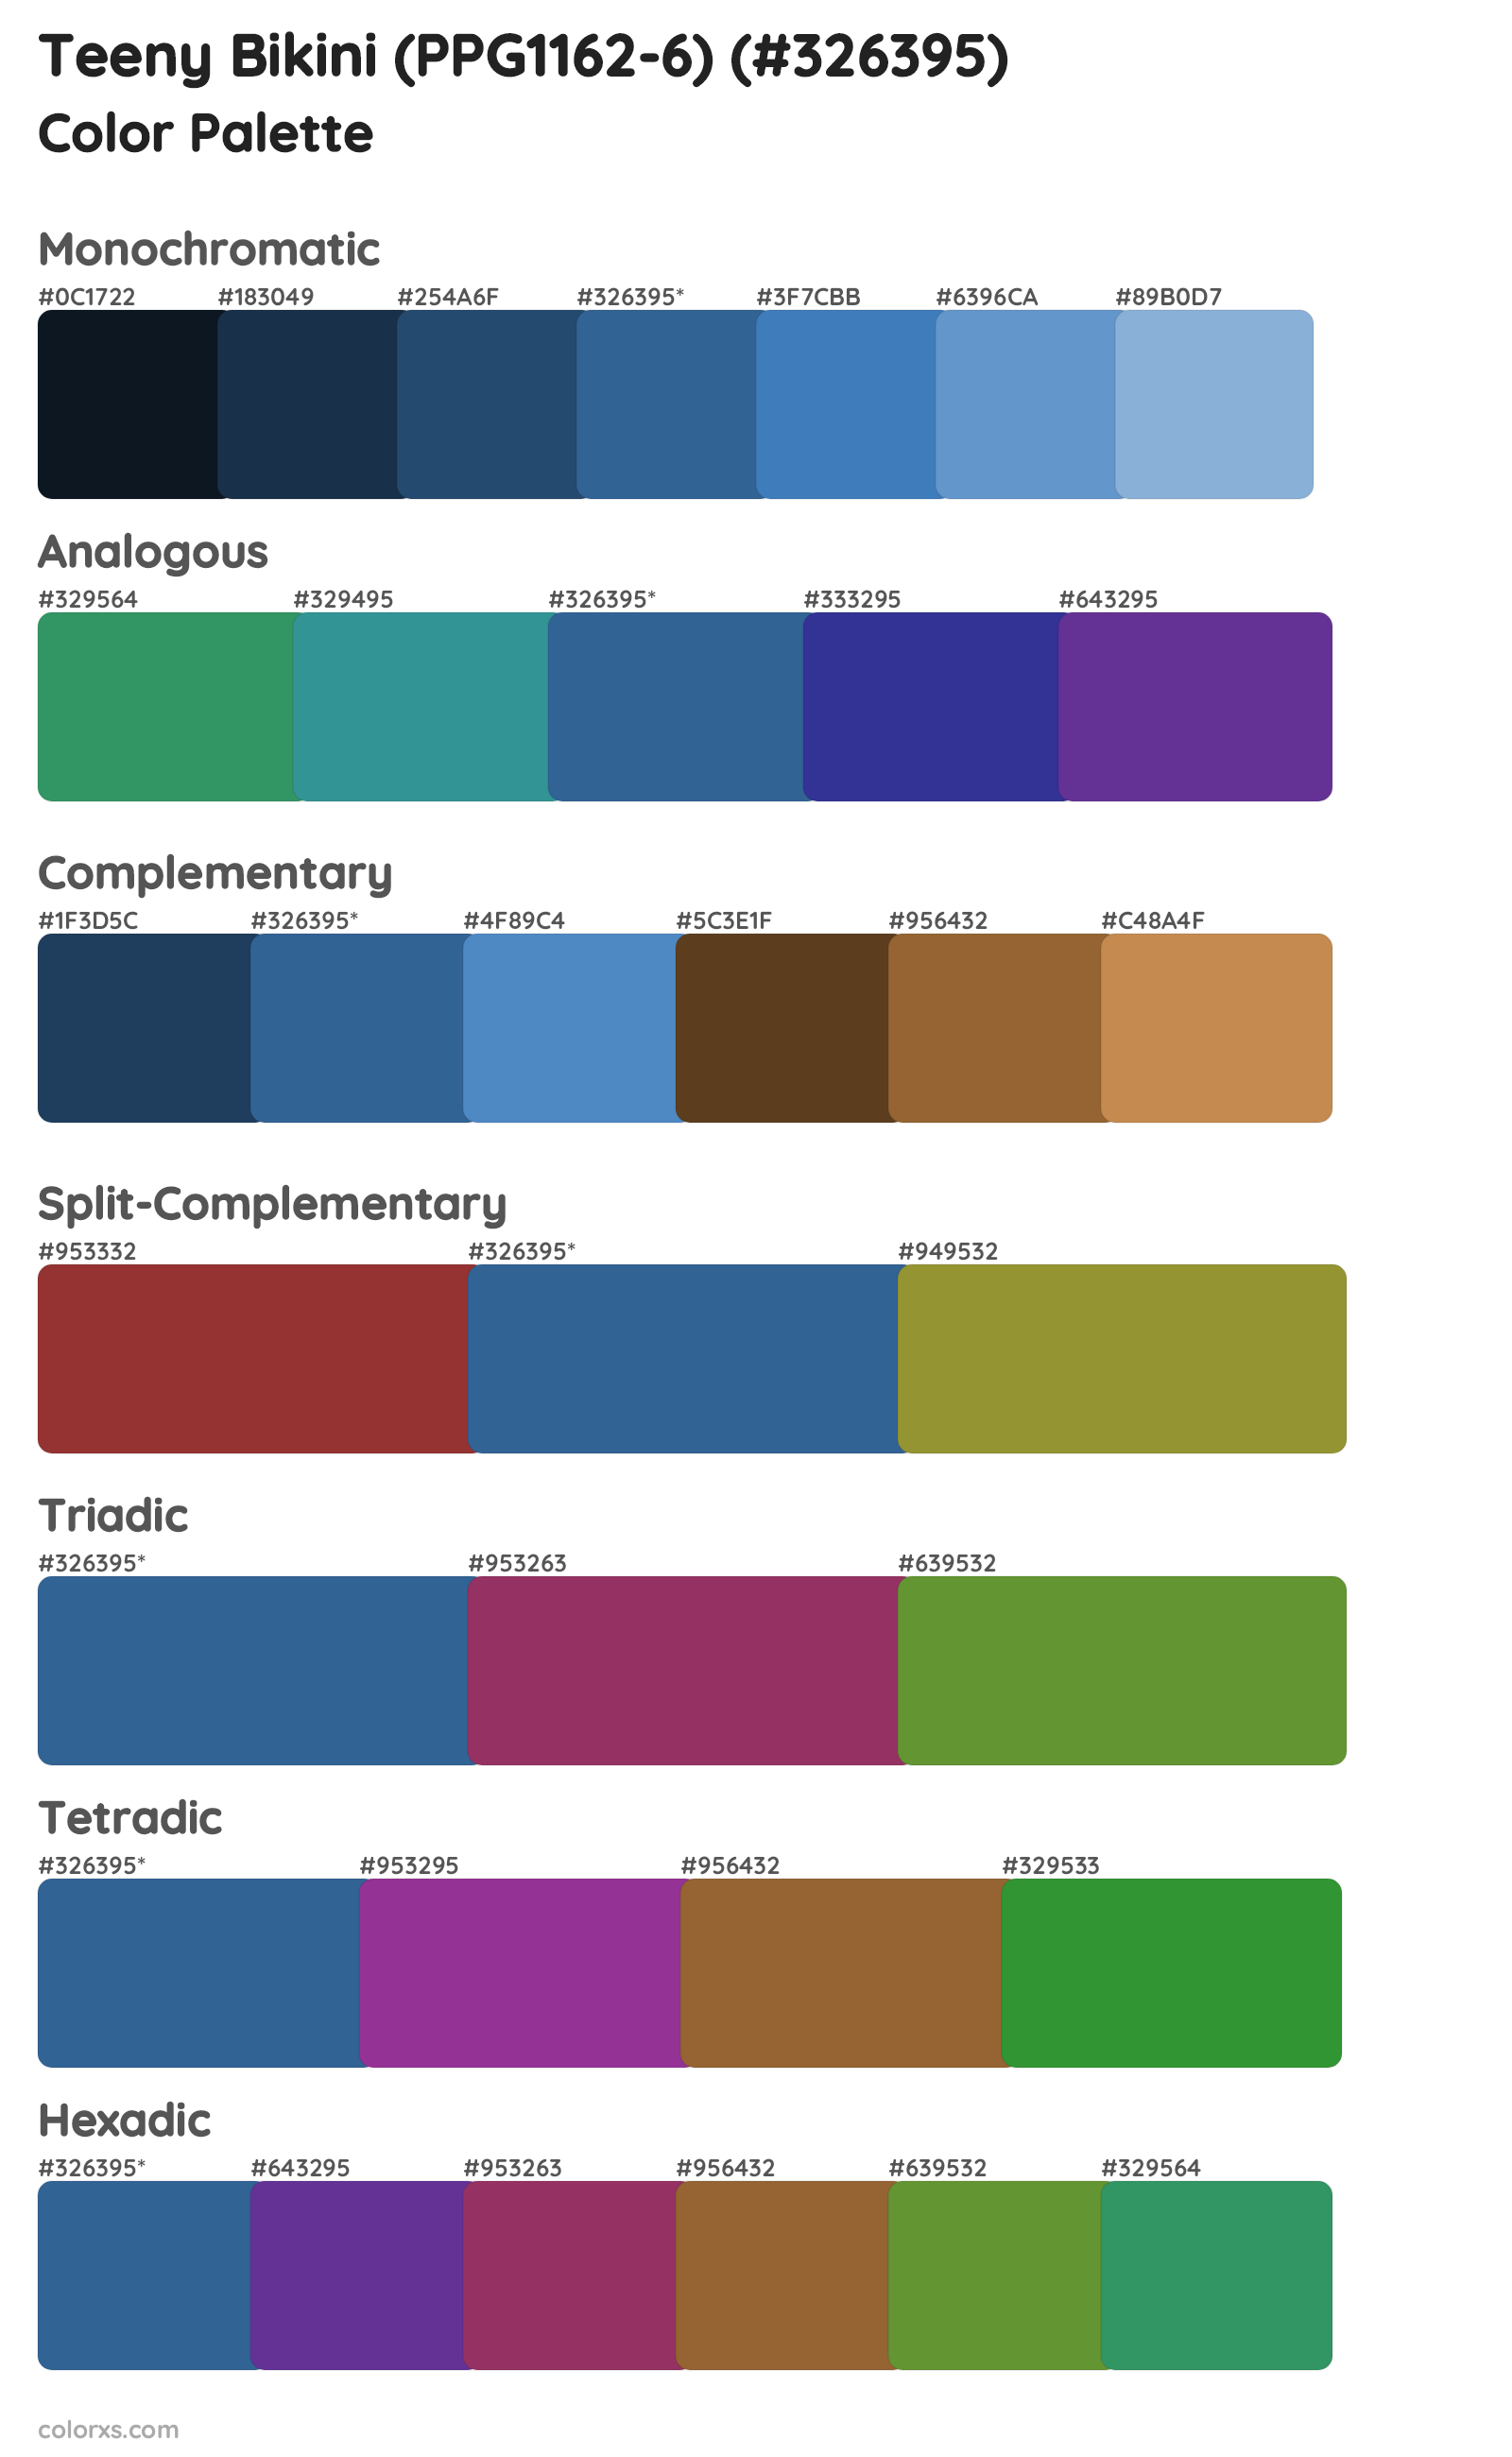 Teeny Bikini (PPG1162-6) Color Scheme Palettes